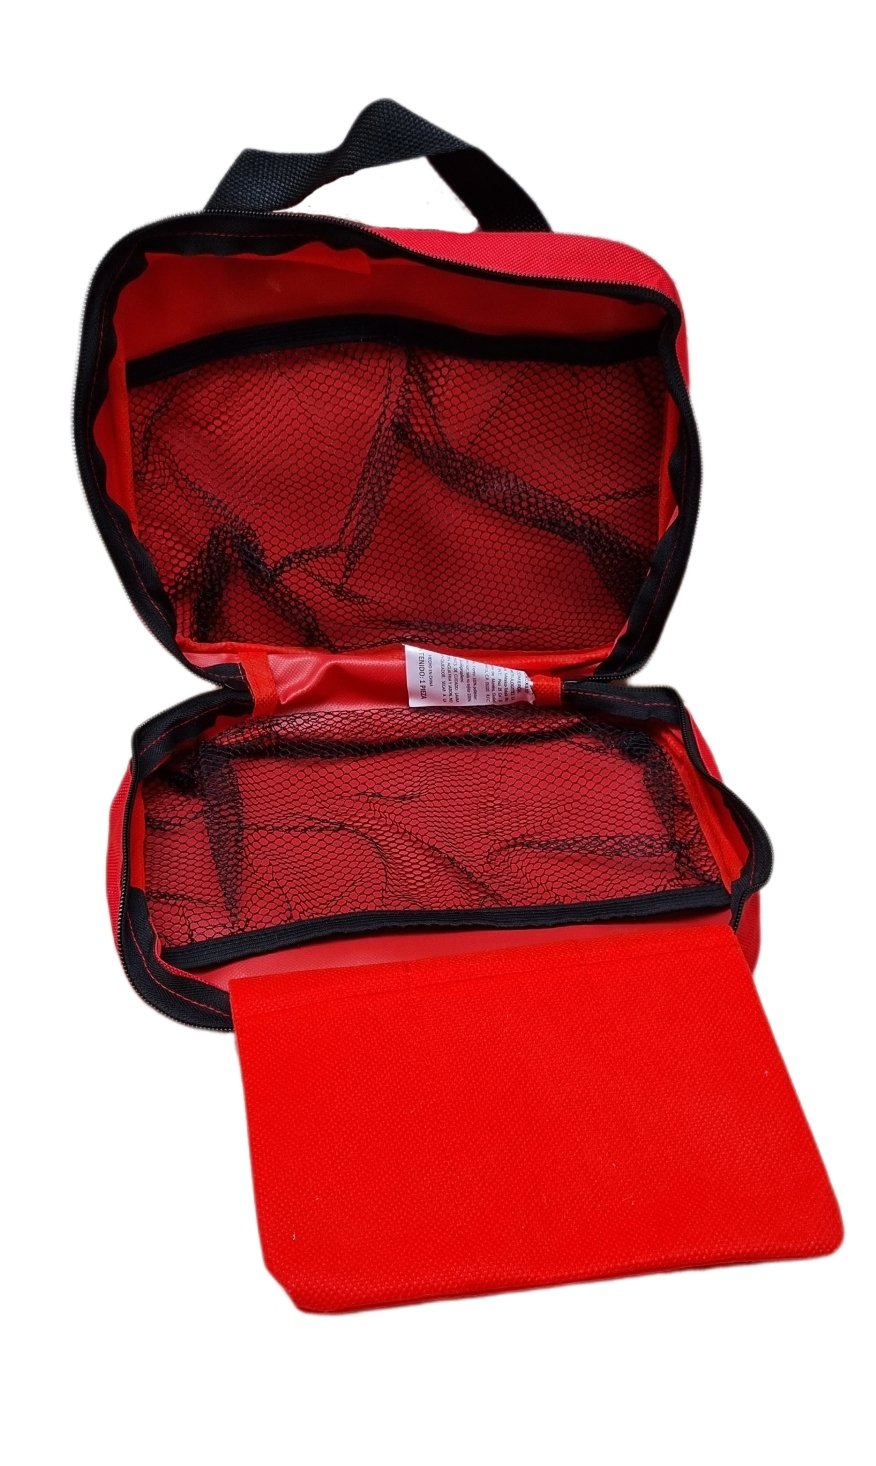 Botiquín Primeros Auxilios Go Pack Mini ProSafety Mx